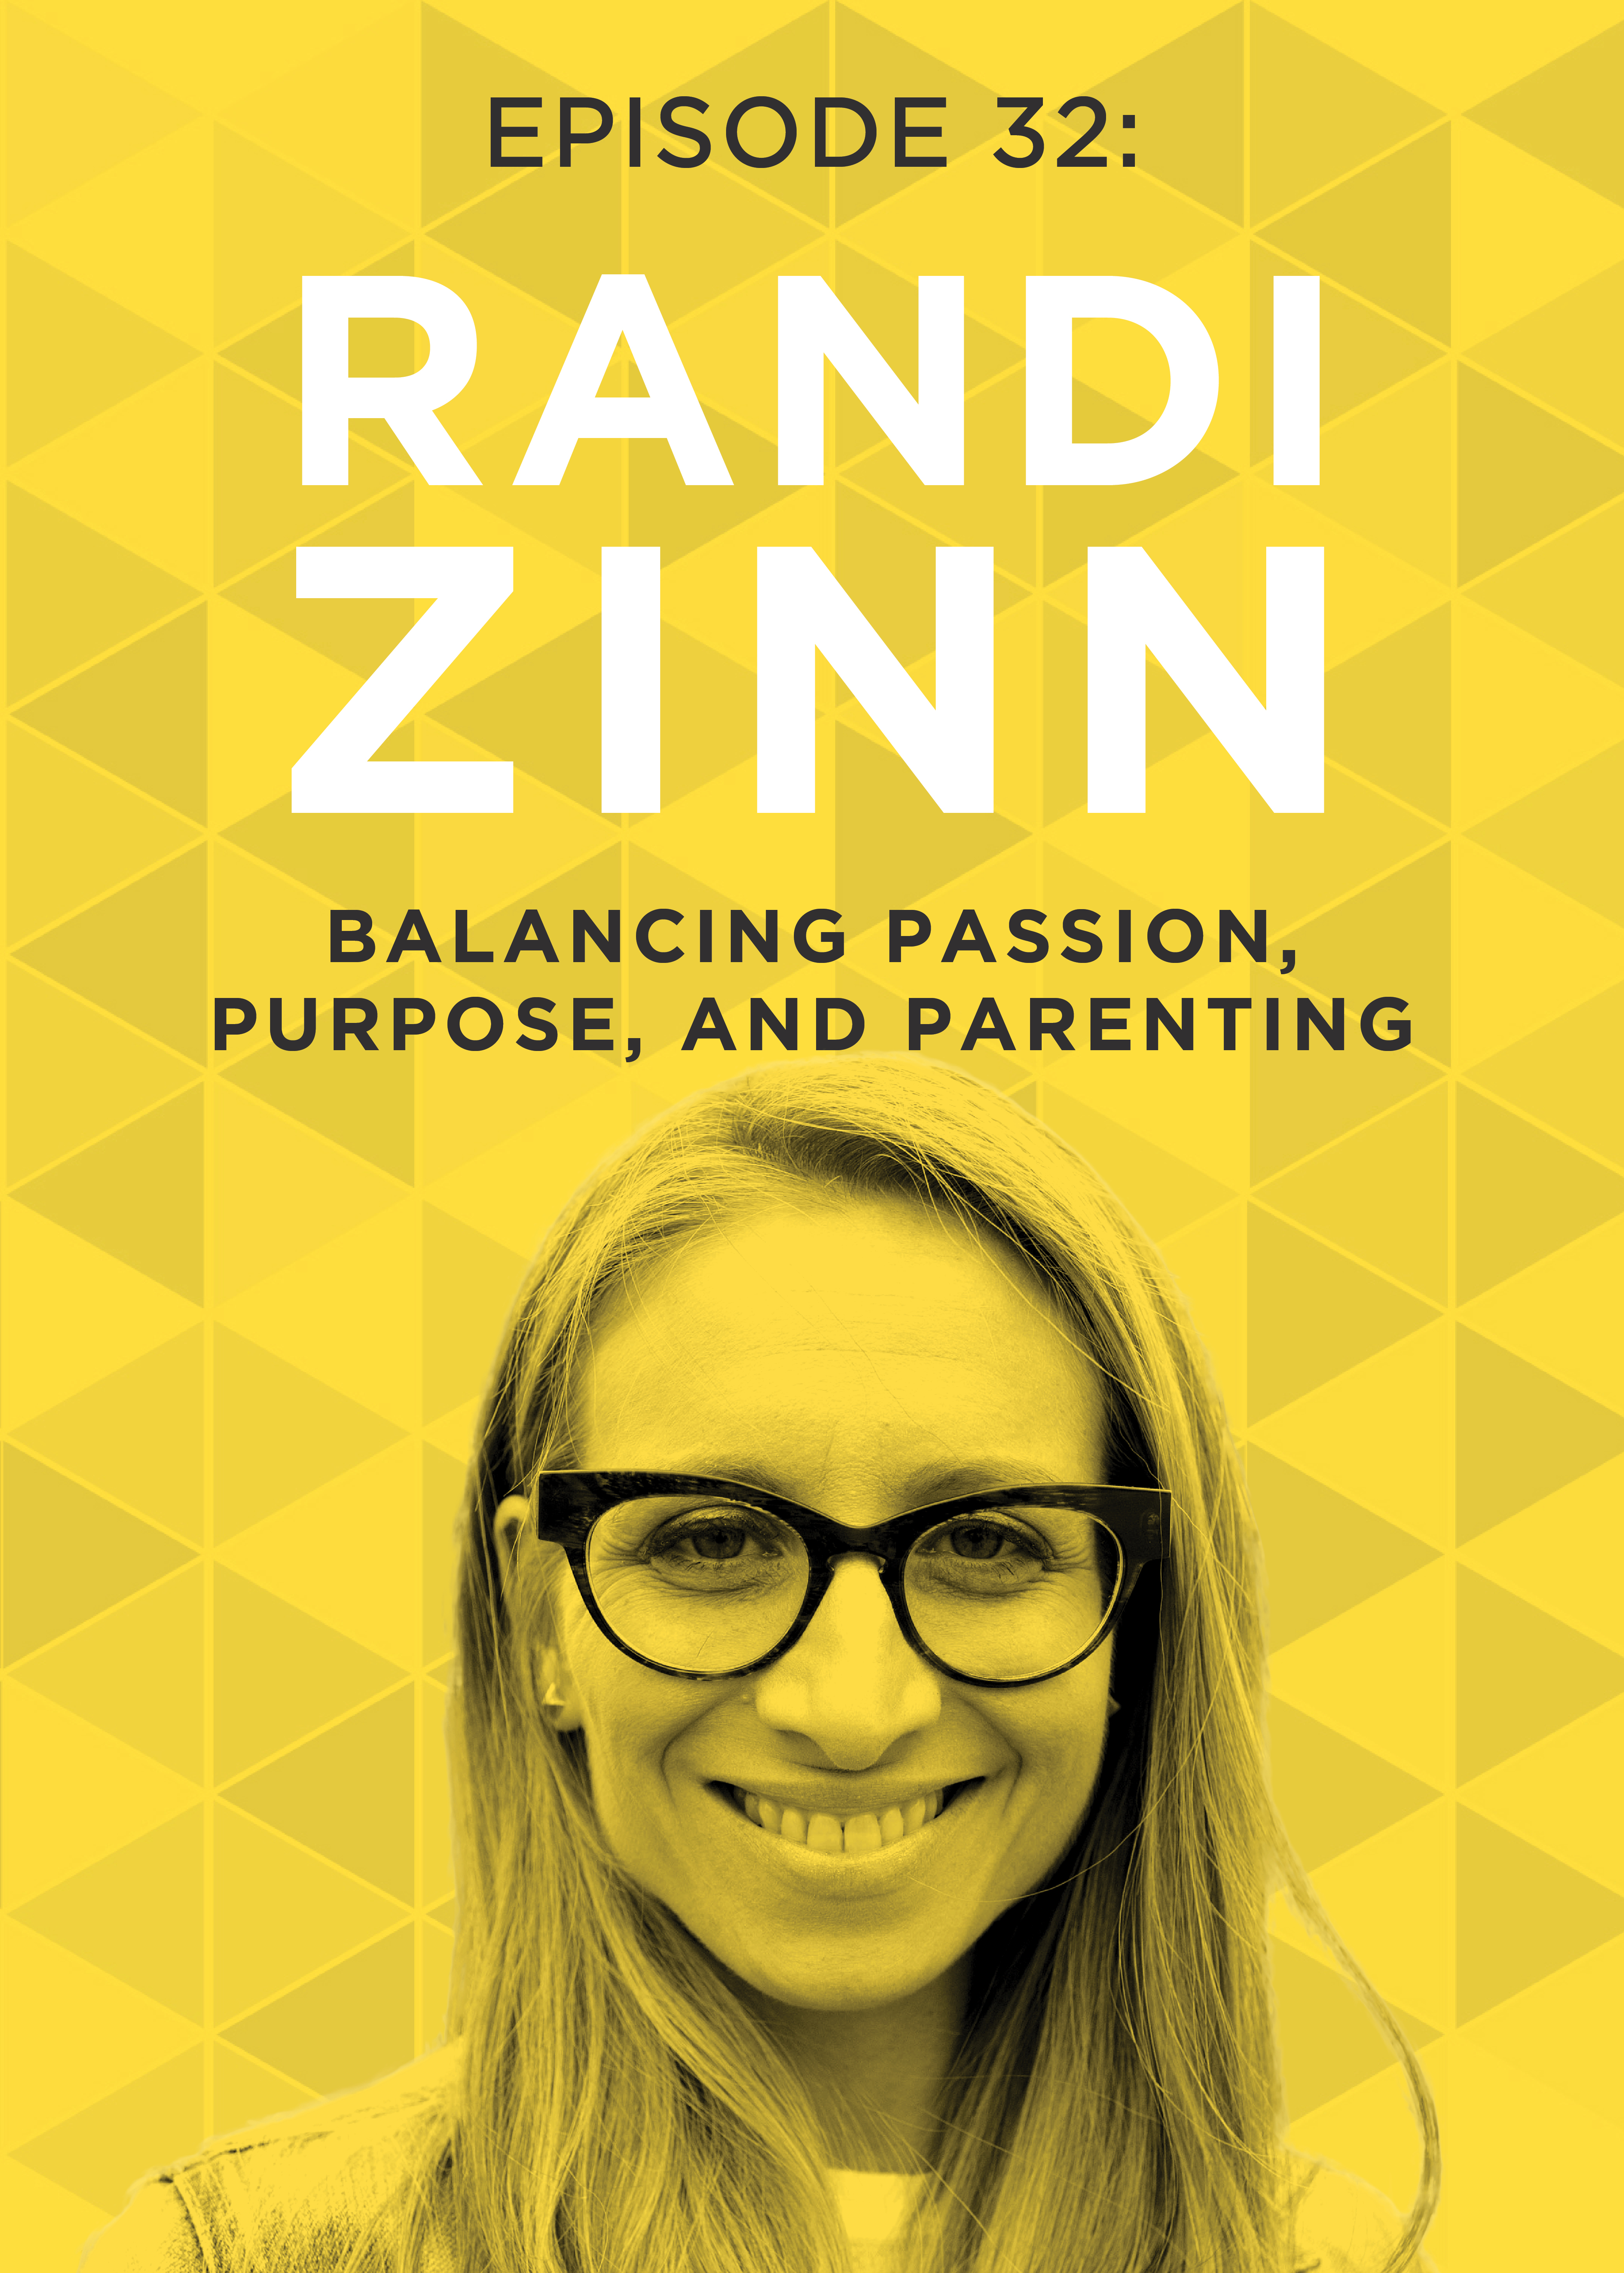 EP 32: Balancing Passion, Purpose, and Parenting with Randi Zinn